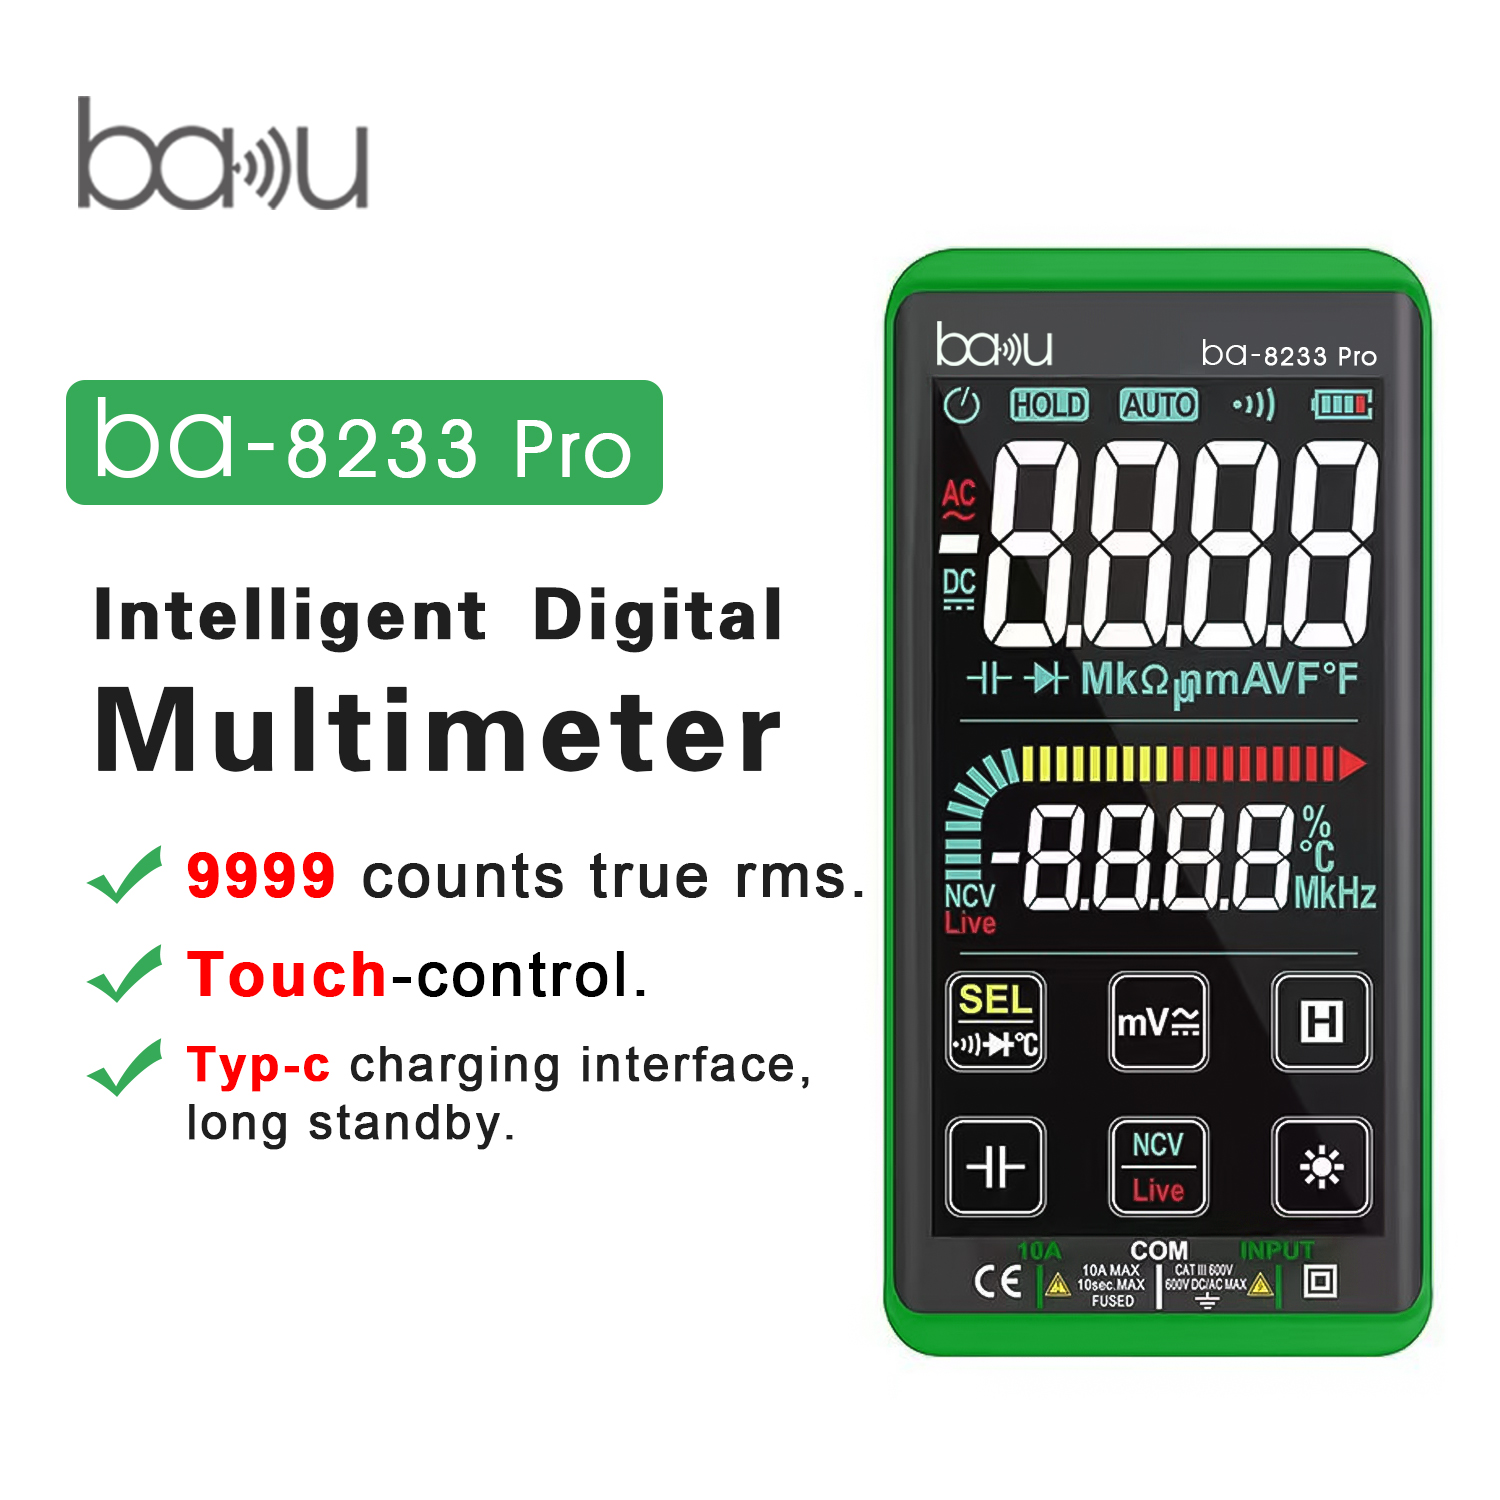 New product BAKU ba-8233 Pro Intelligent Digital Multimeter